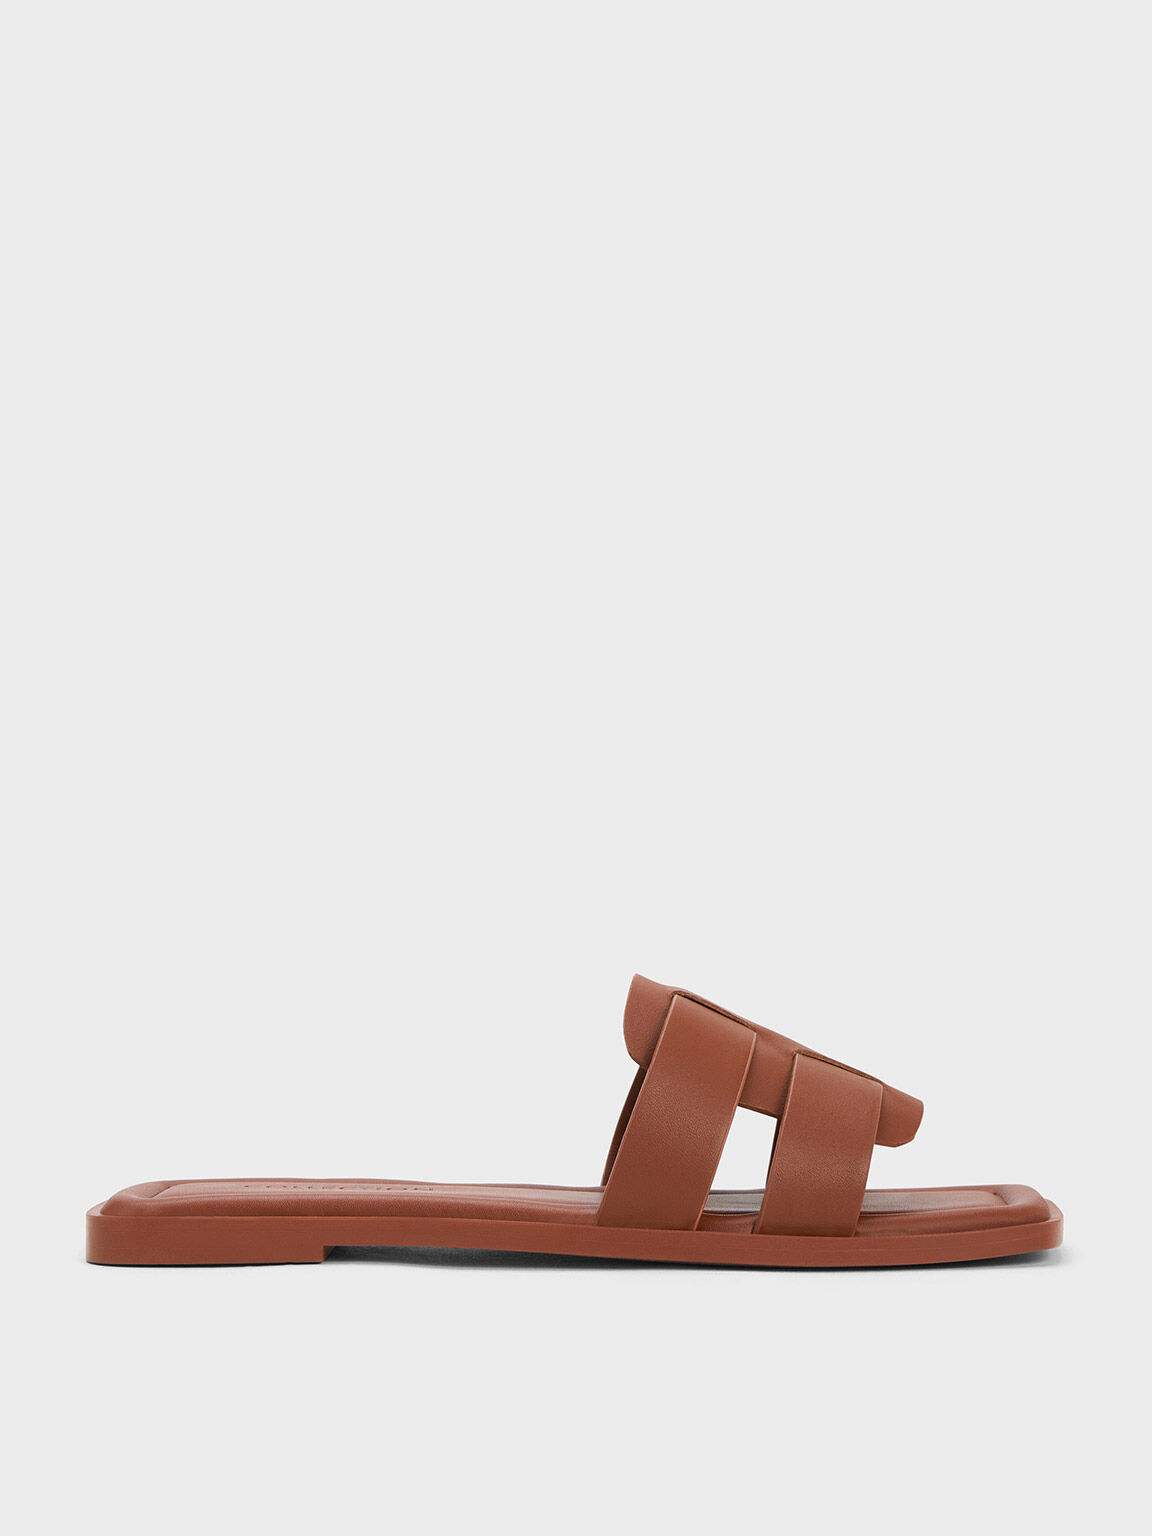 Interwoven Leather Slide Sandals, Dark Brown, hi-res